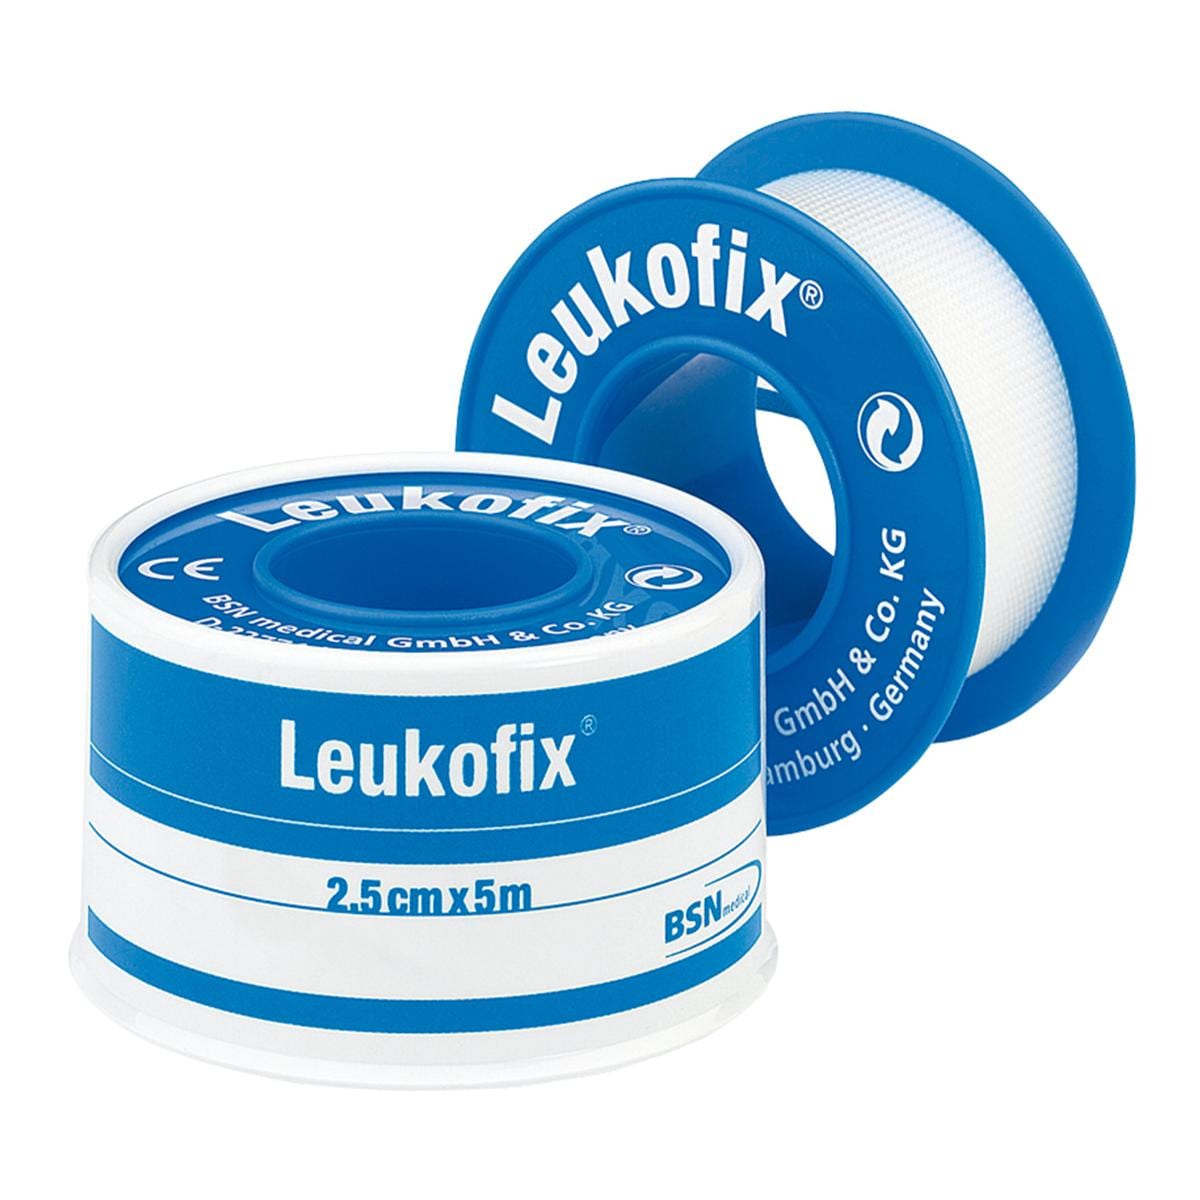 Leukofix - 2,5 cm x 9 m, per stuk